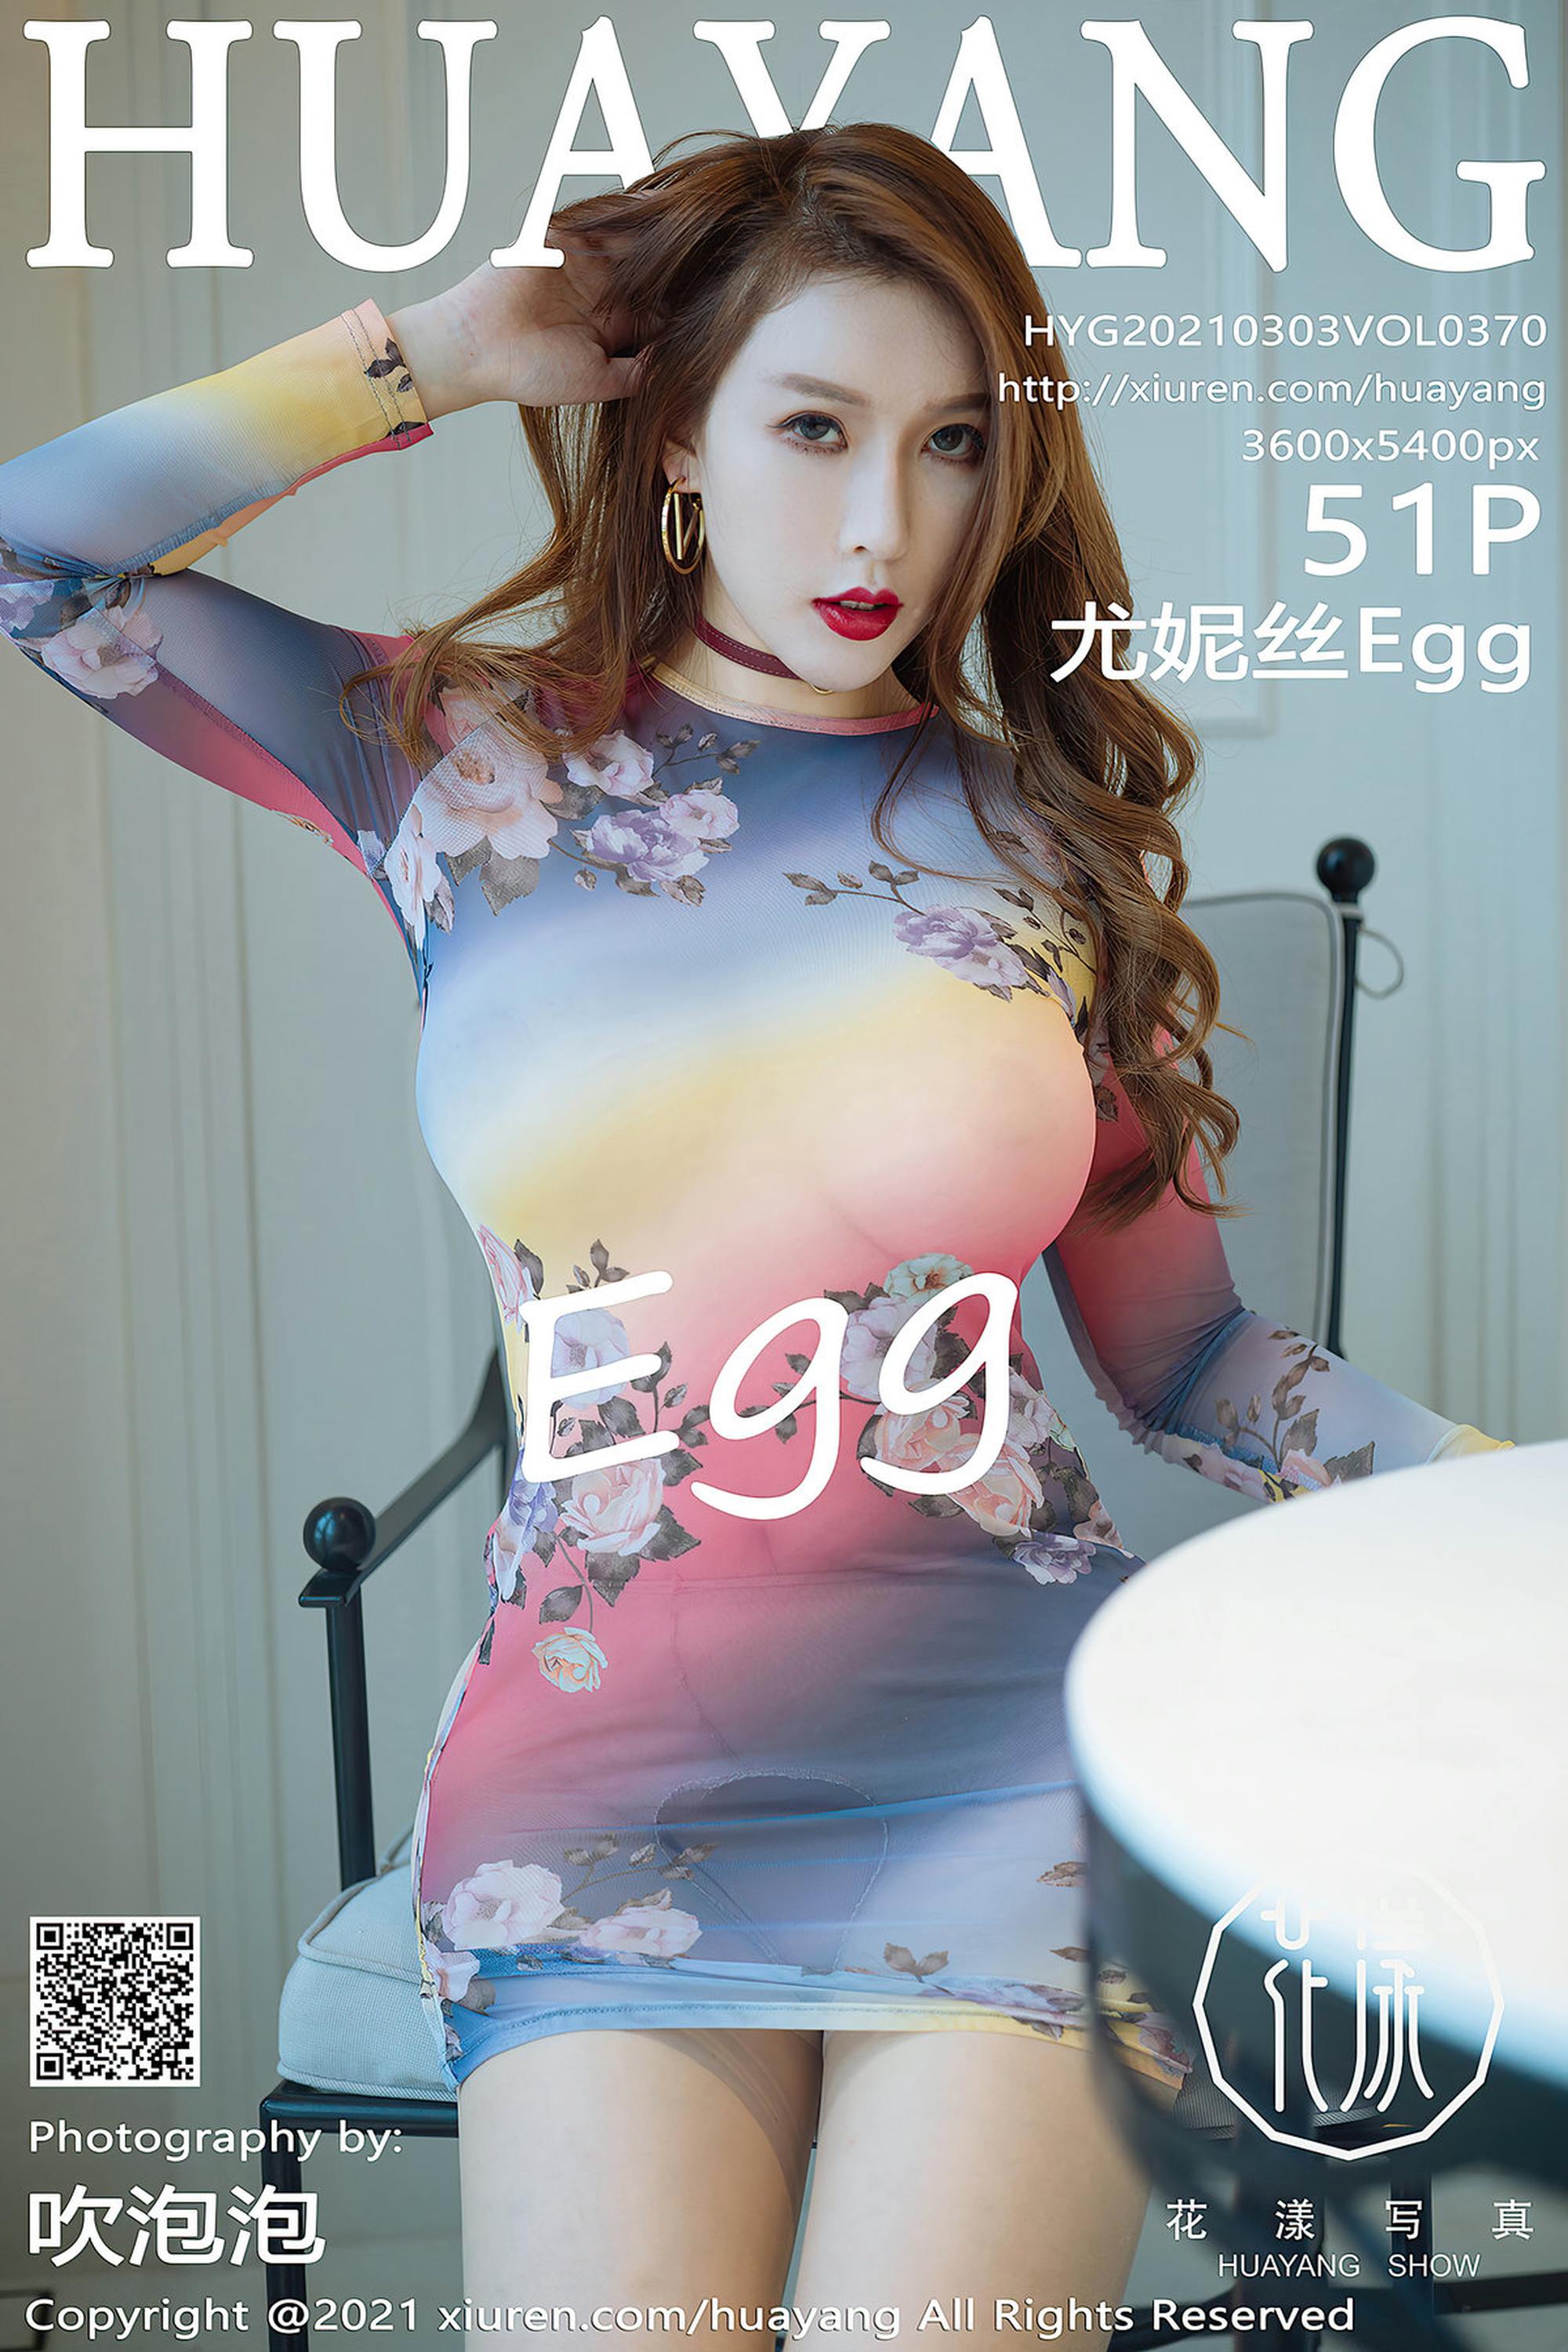 【HuaYang花漾】2021.03.03 Vol.370 尤妮絲Egg 完整版無水印寫真【52P】 - 貼圖 - 絲襪美腿 -